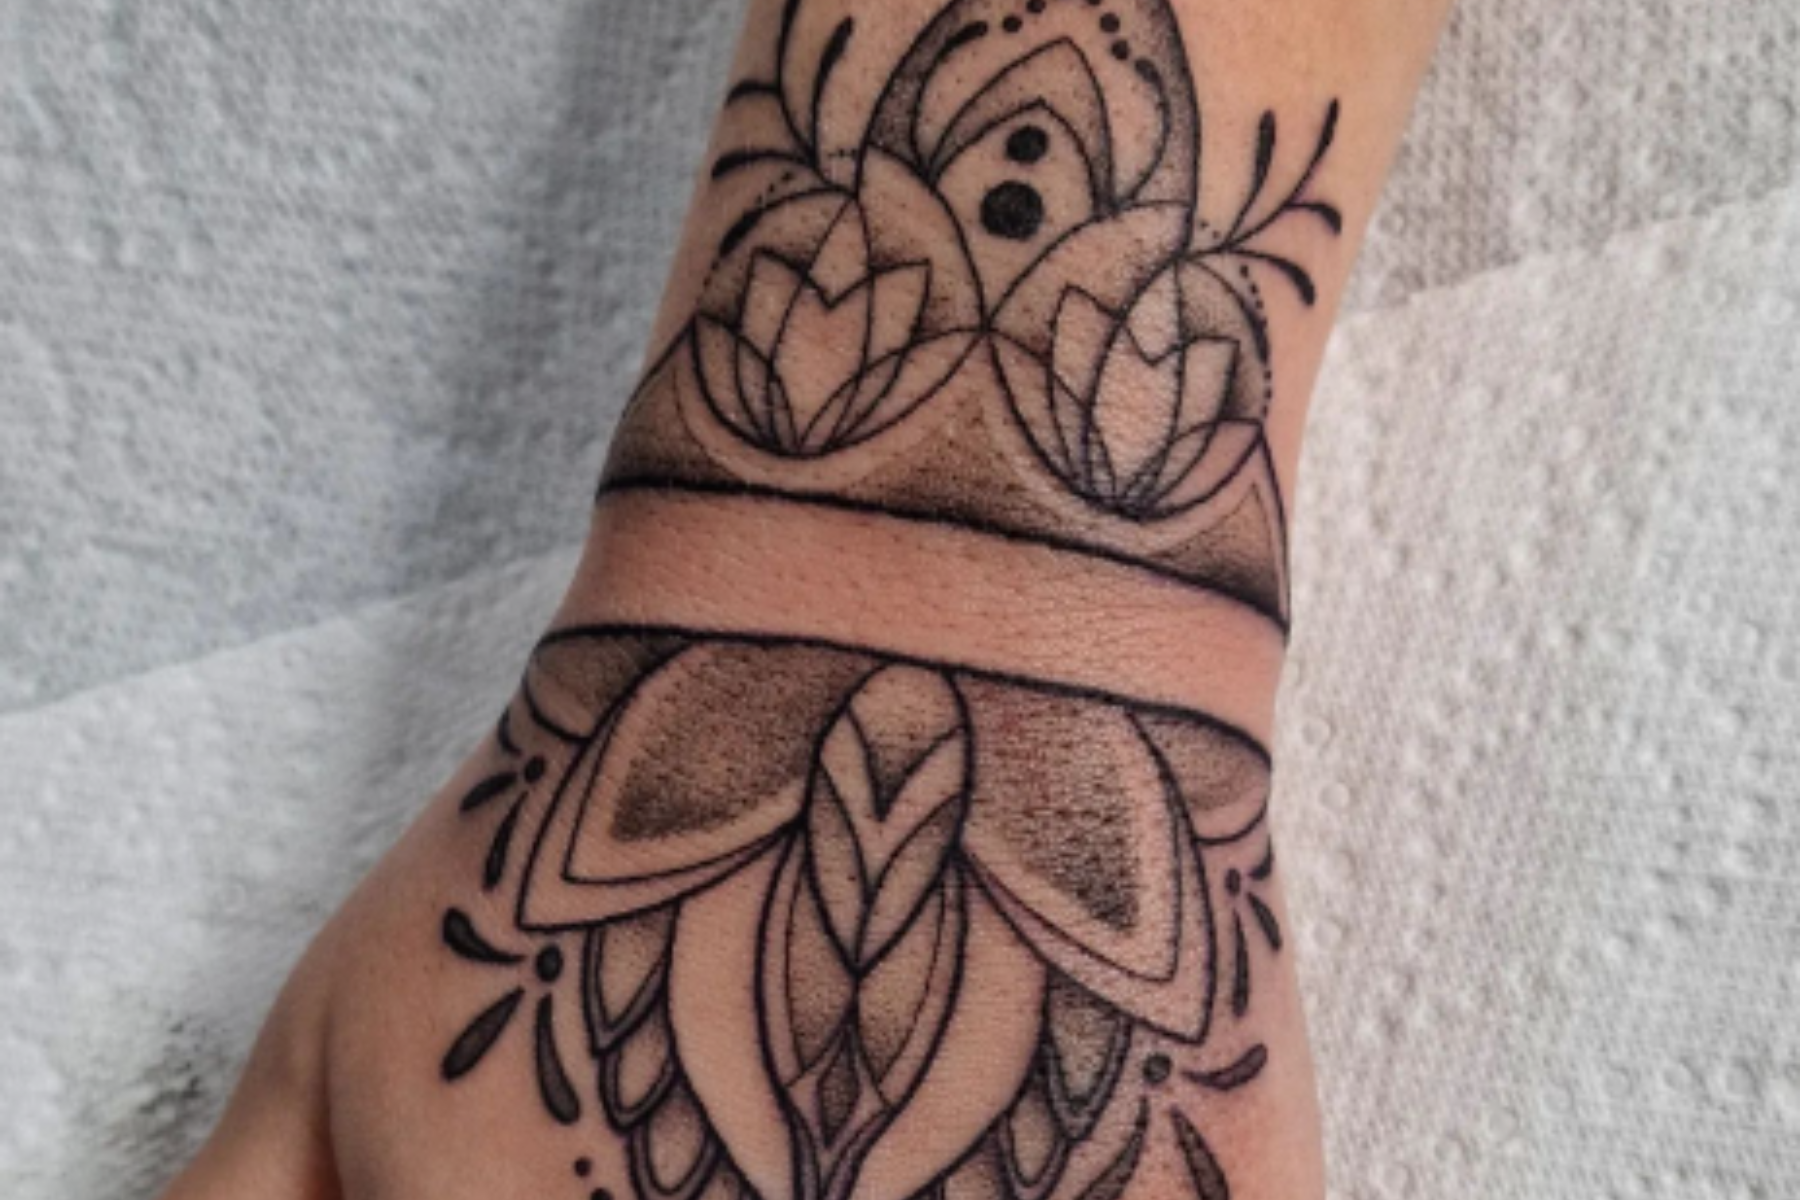 Temporary Tattoo Sticker Stencil Sticker Rose Peonies Mandala Flower Tattoos  | eBay